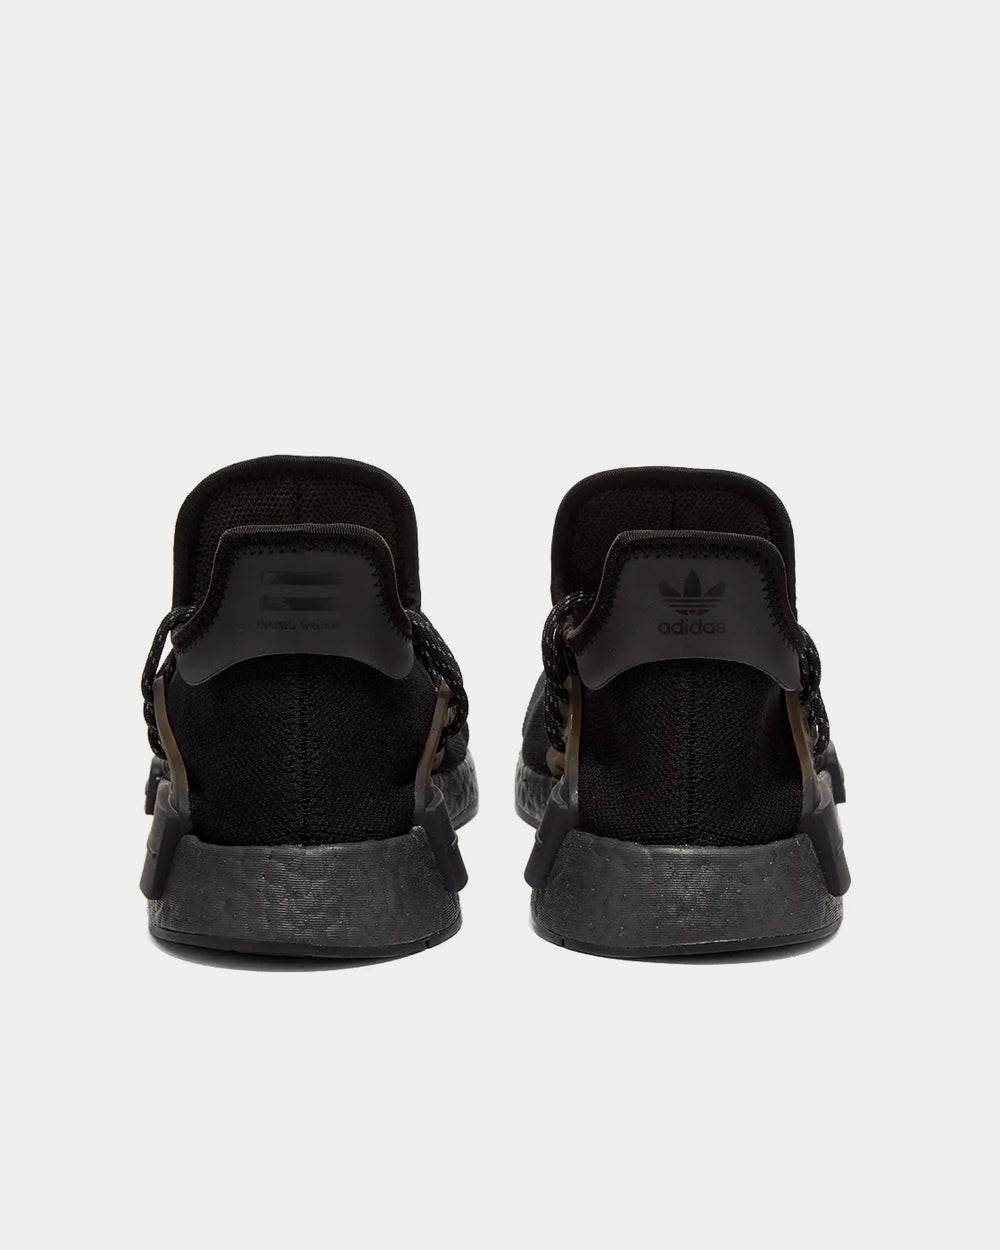 Adidas x Pharrell Williams - HU NMD Triple Black Low Top Sneakers